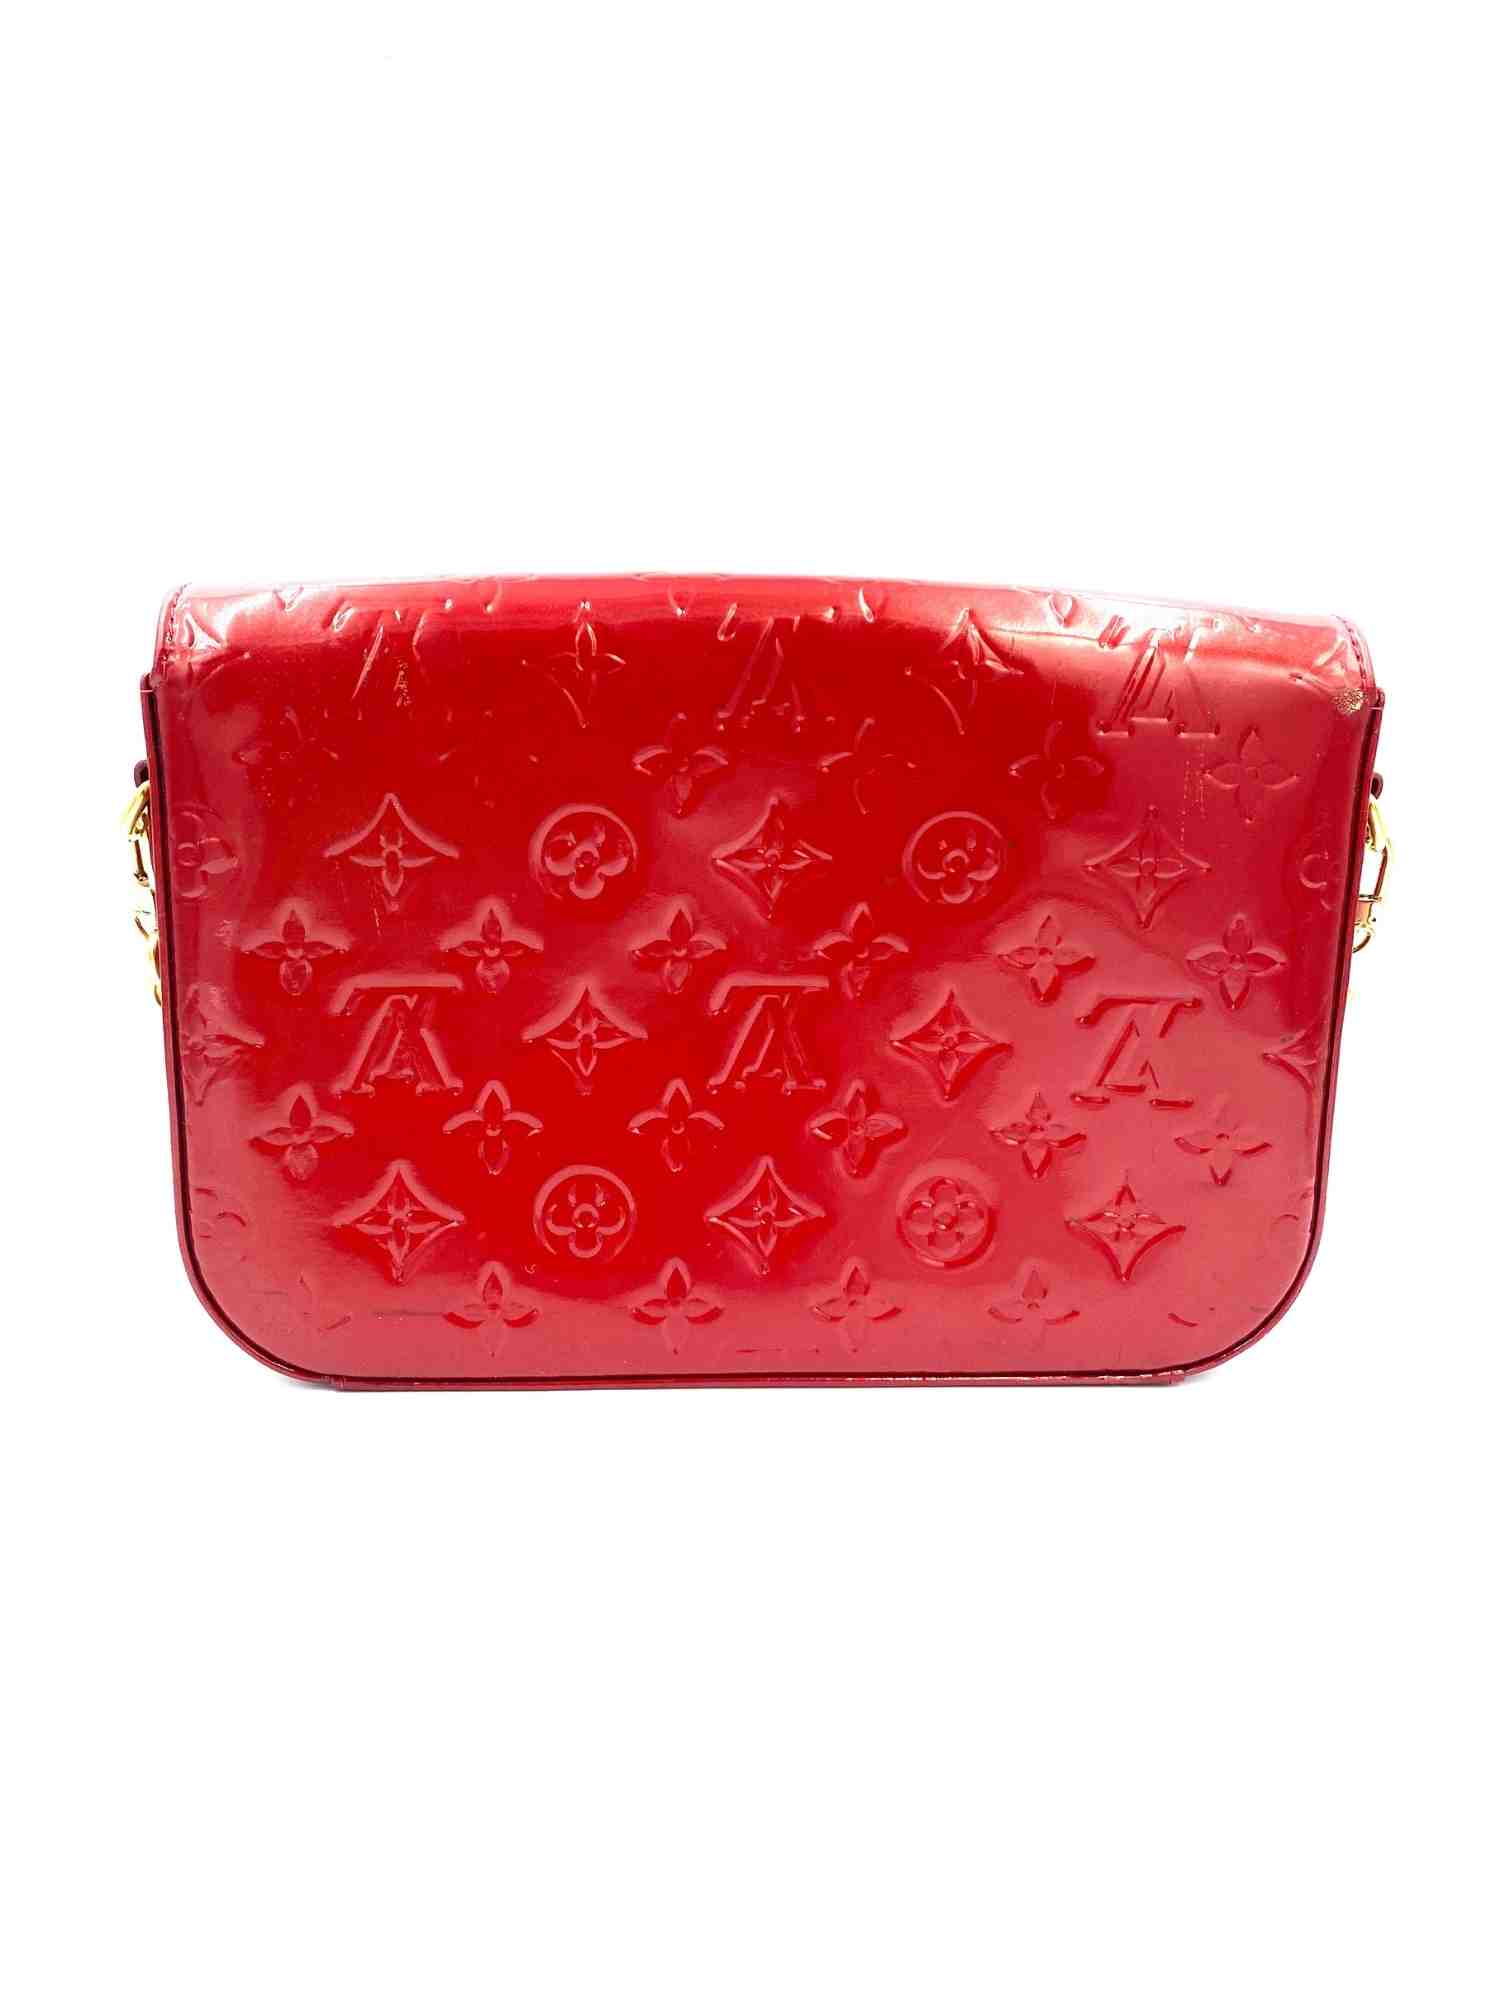 Bolsa Louis Vuitton Monogram Verniz Vermelha